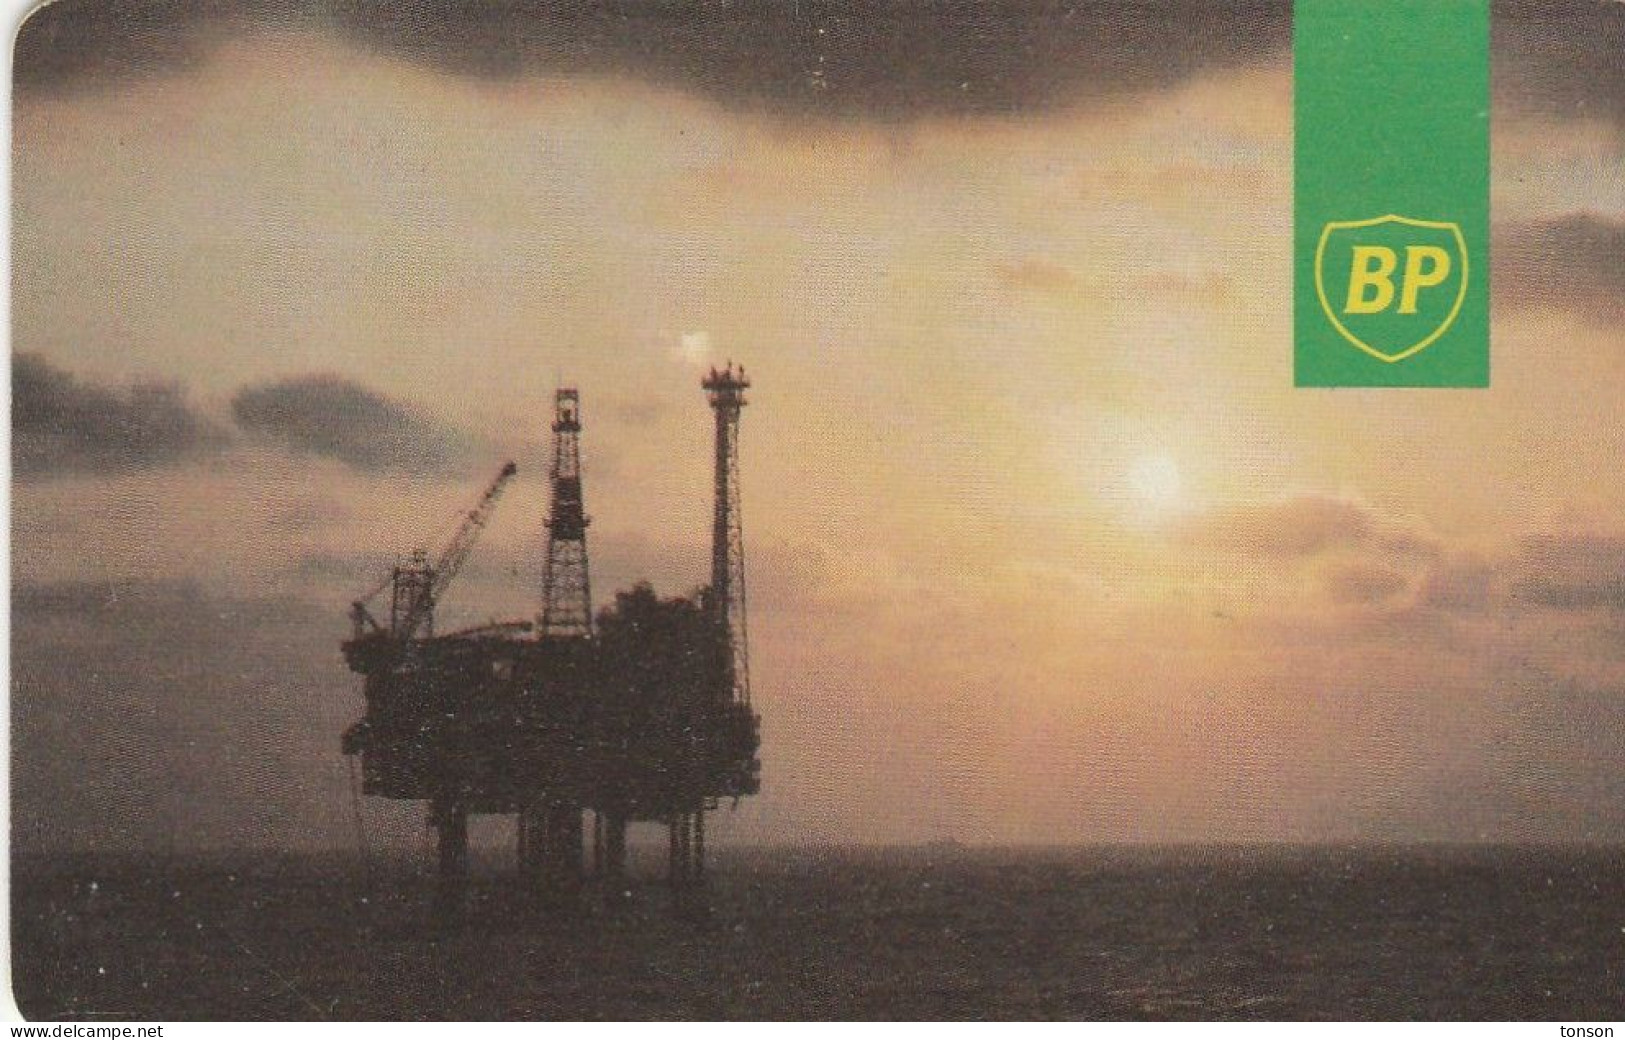 UK Oil Rig Phonecard - BP, GB-OIL-AUT-0001, BP (Blue IPL Logo), 20 Units, 2 Scans. - [ 2] Erdölplattformen